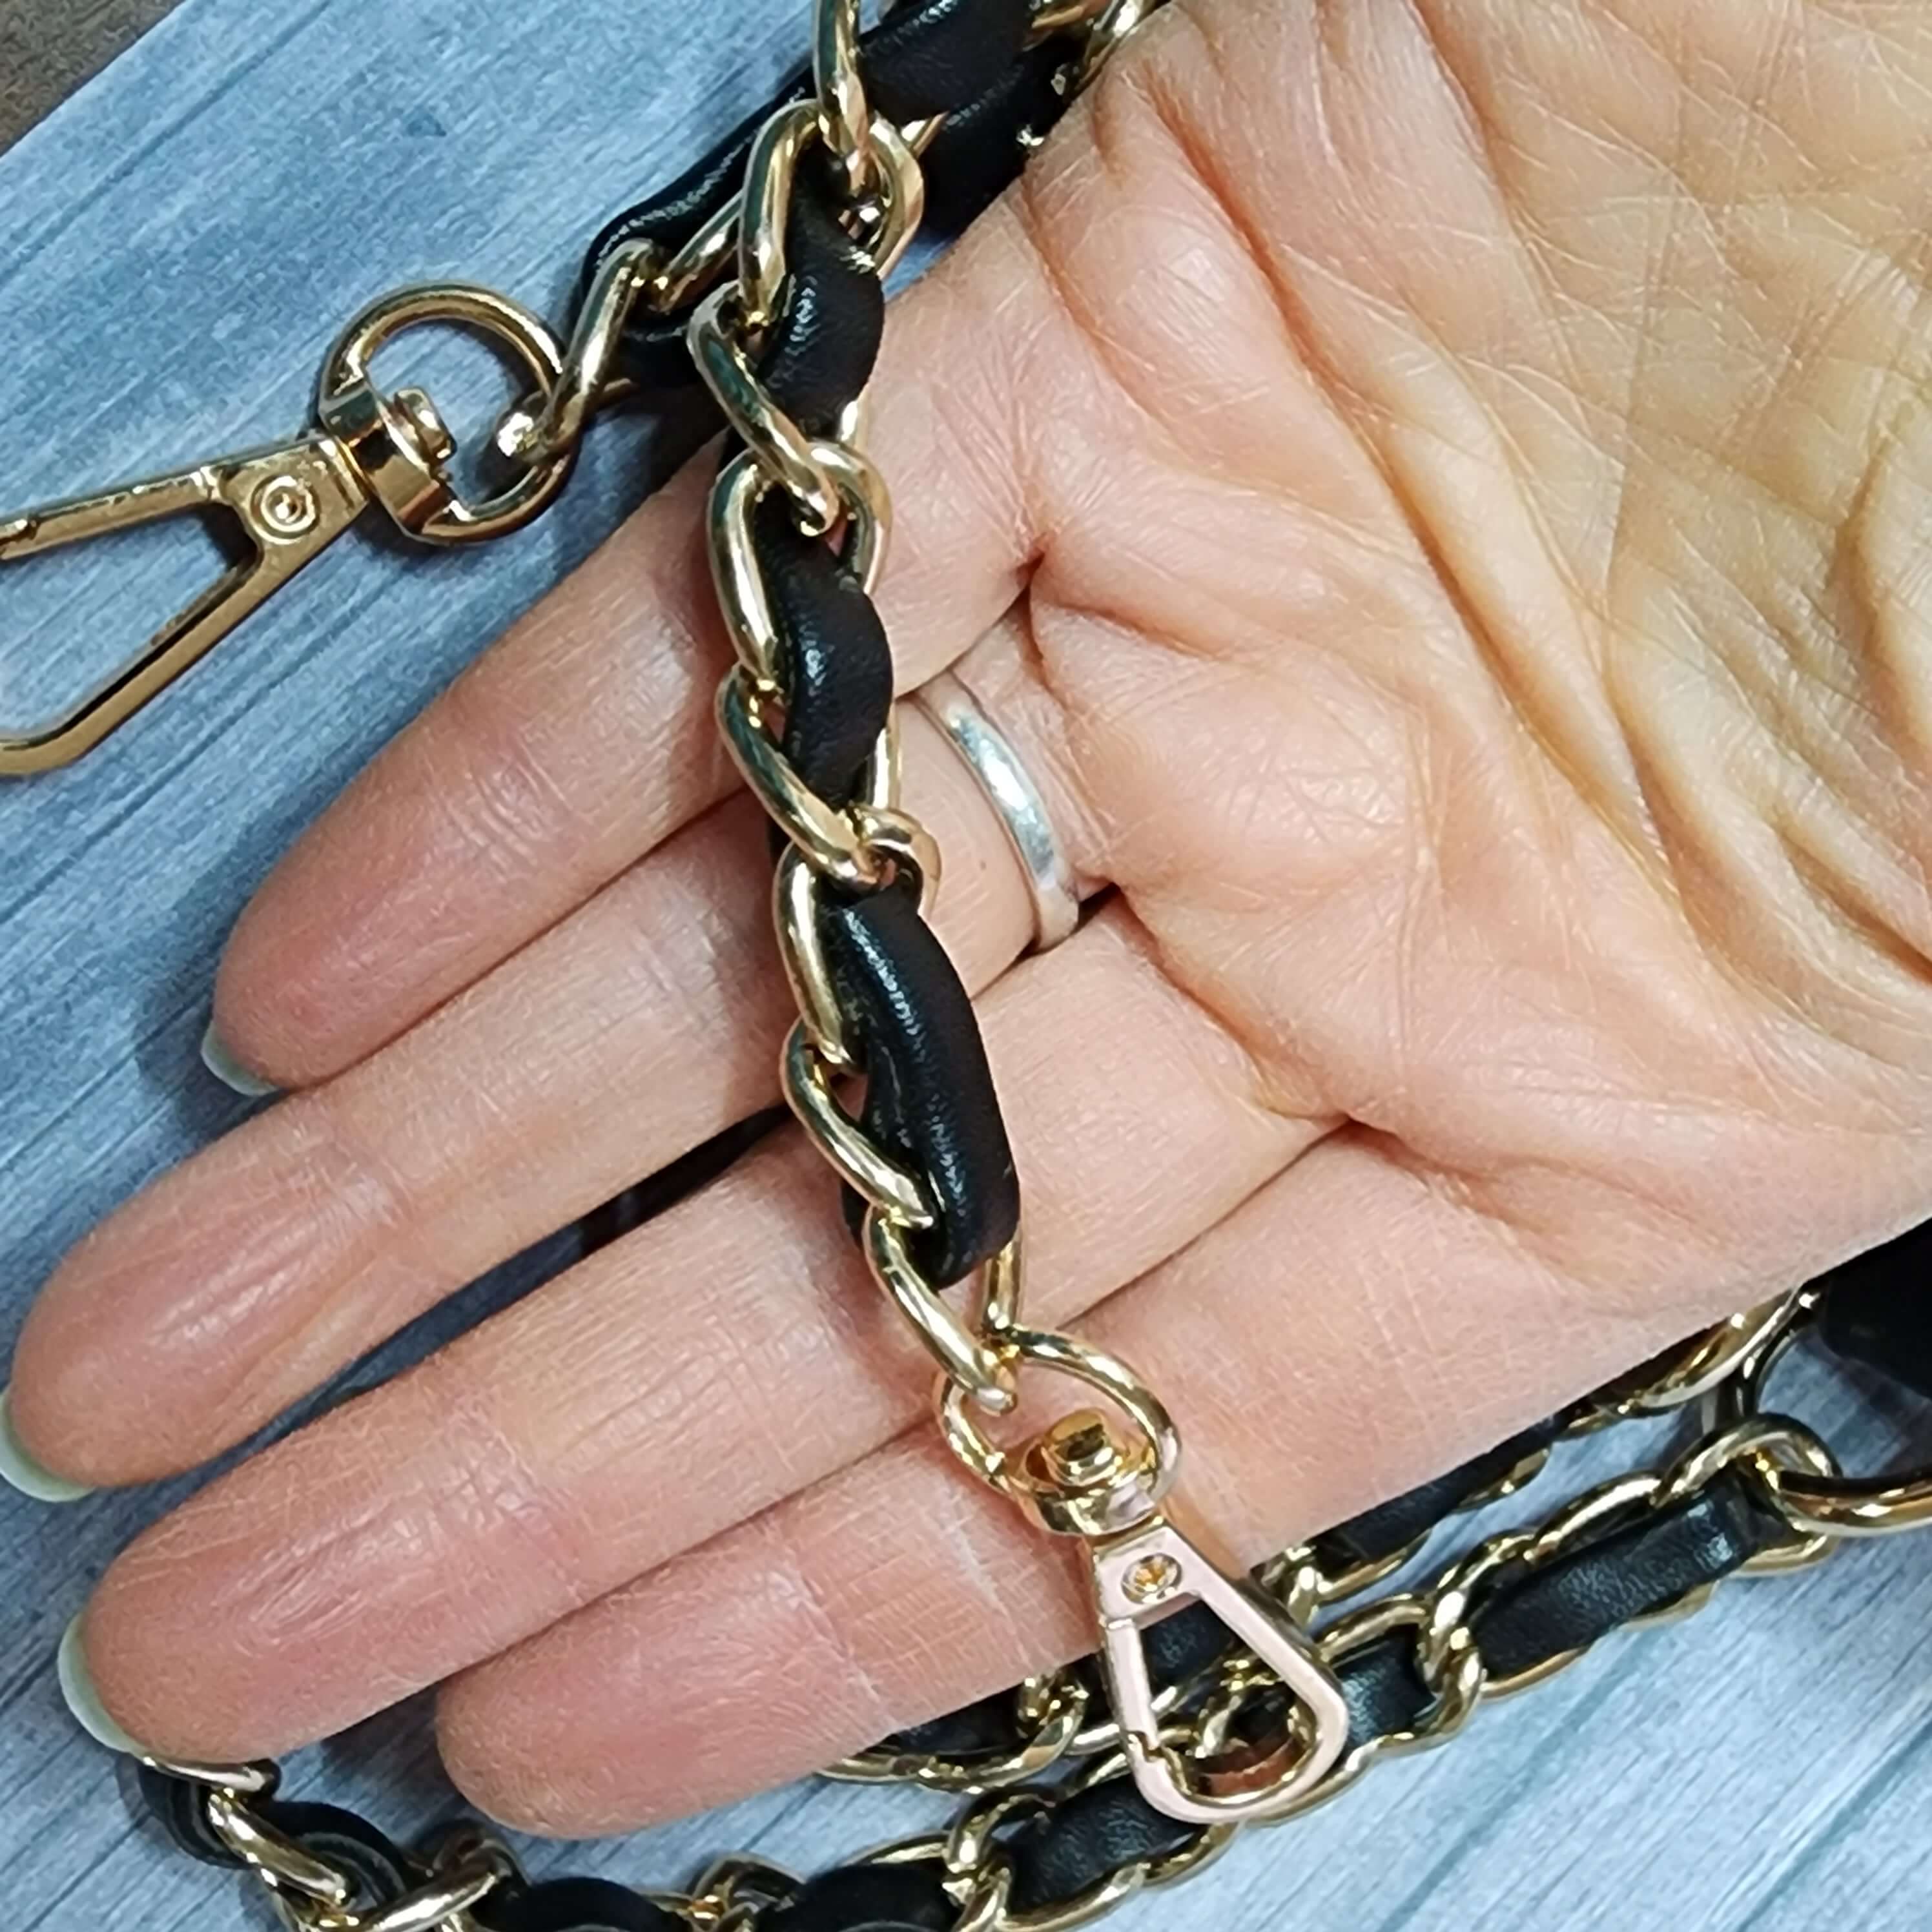 47 Inch Purse Chain Strap Shoulder Crossbody Replacement Strap Silver Me… | Chain  strap, Replacement straps, Purses